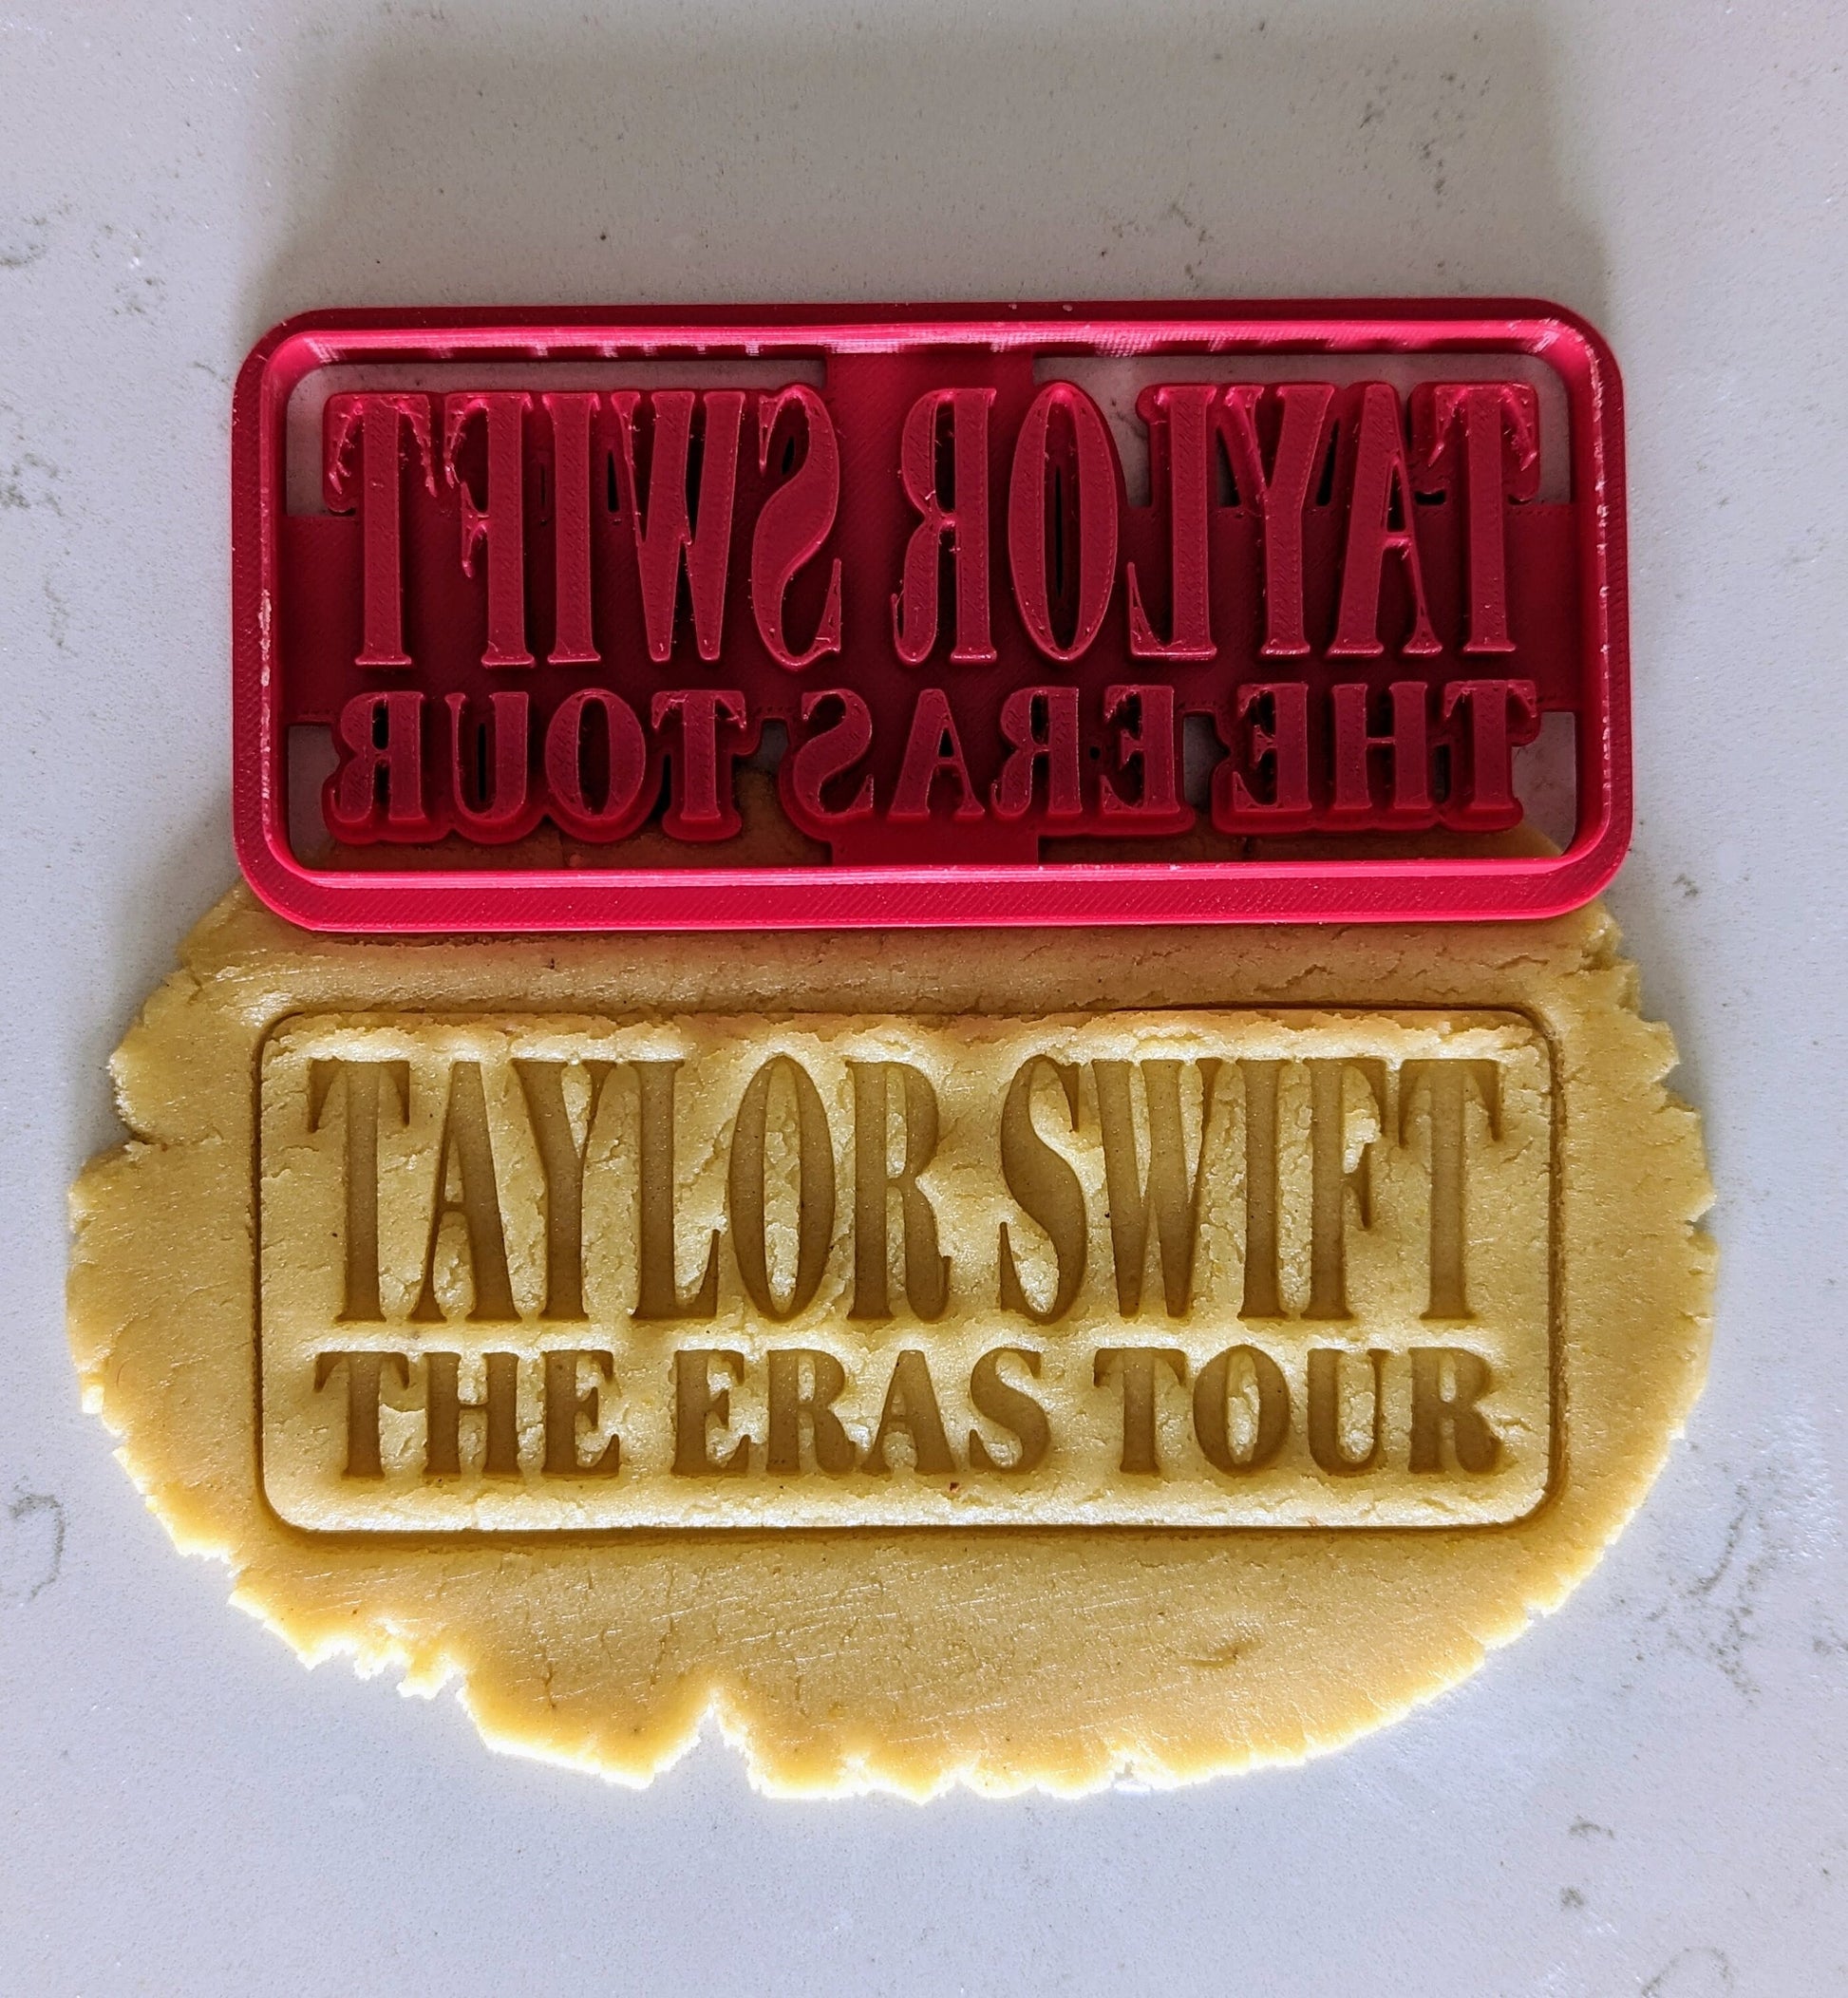 Taylor Swift Eras Tour cookie cutter